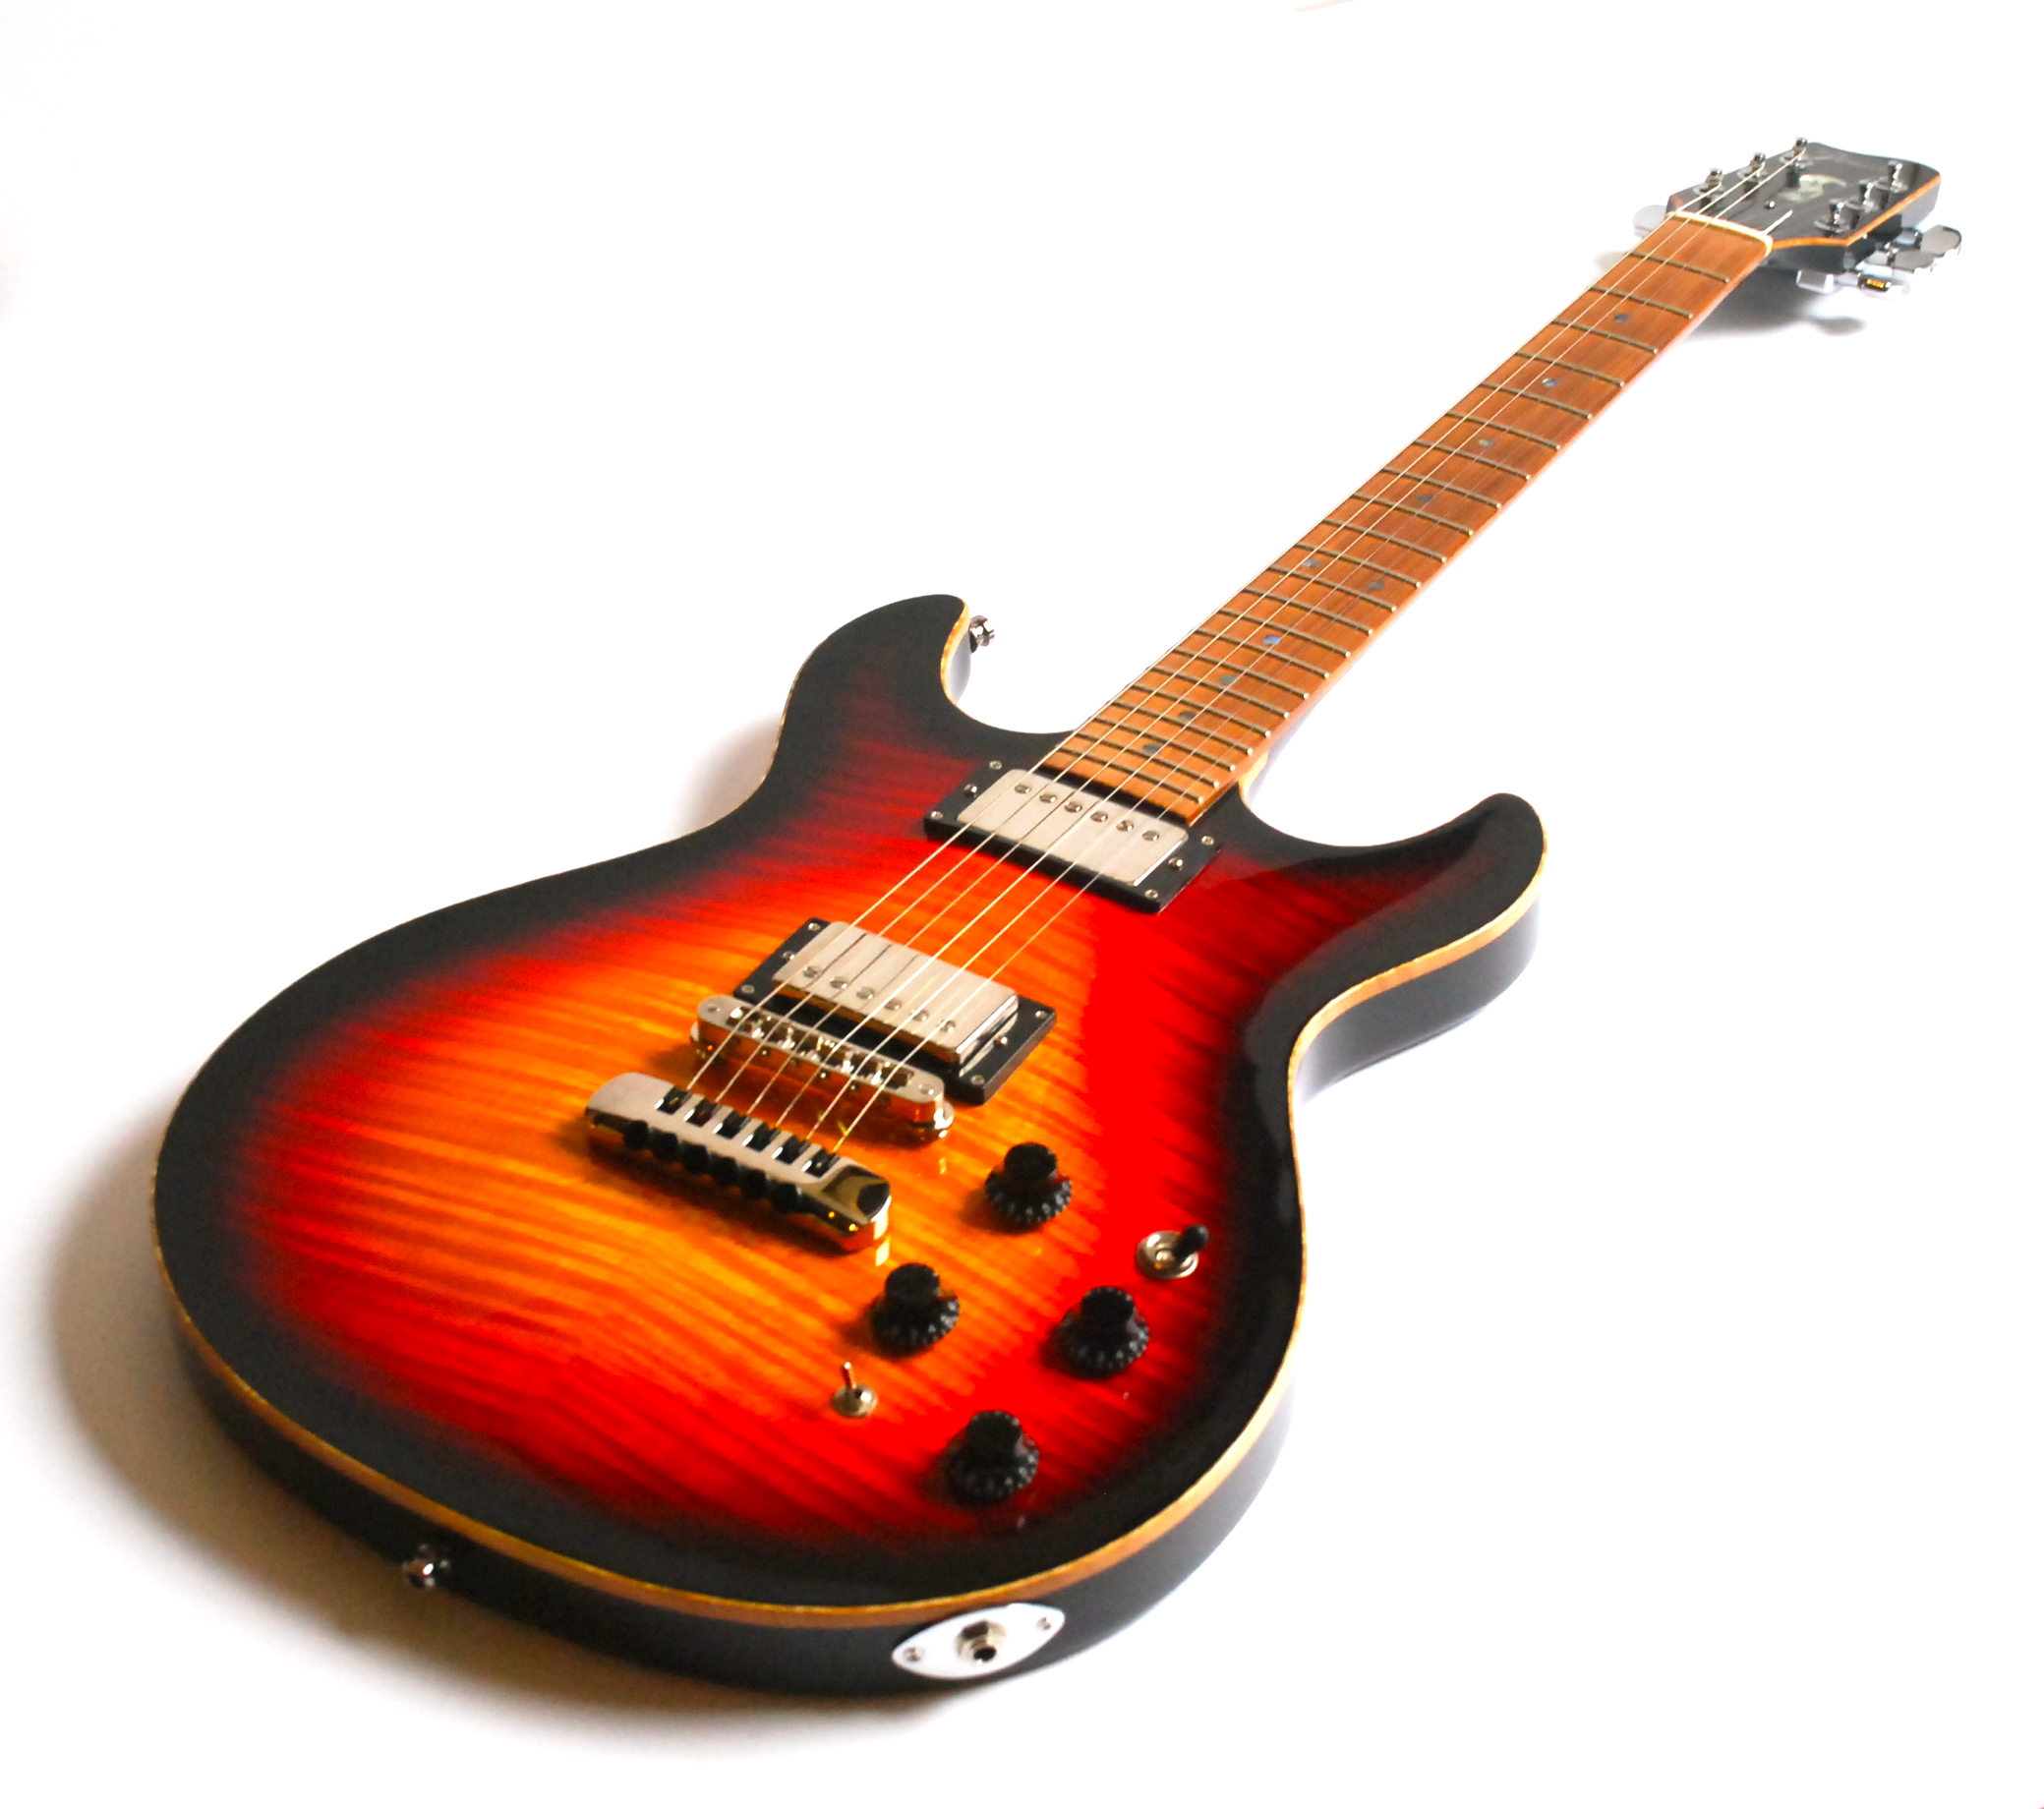 Fender custom shop robben ford model guitar #4